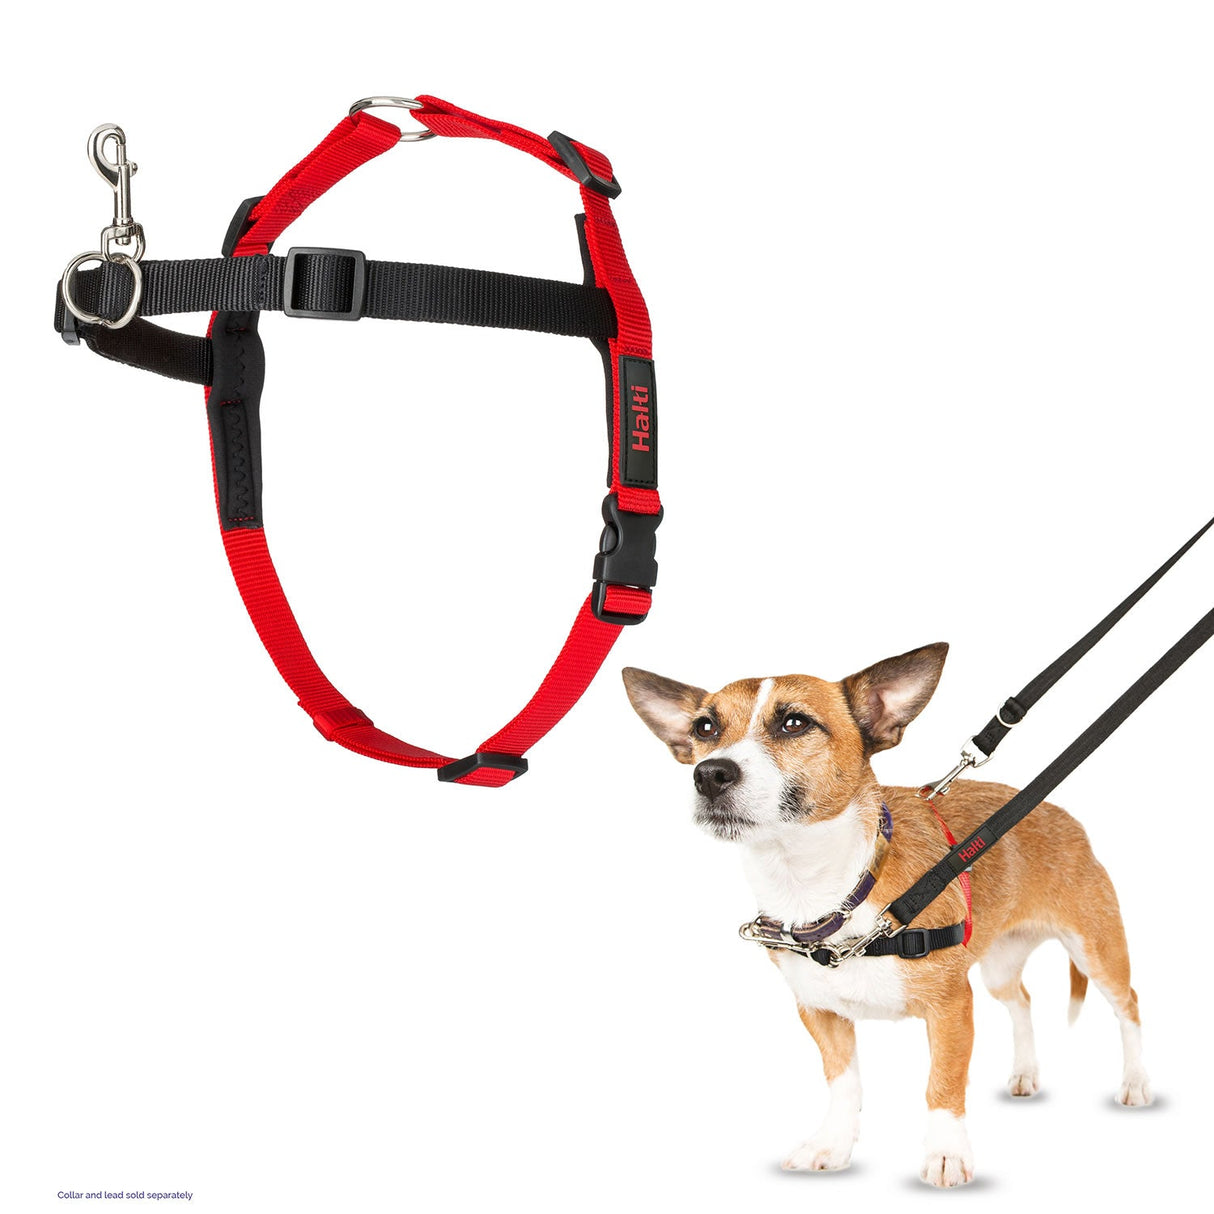 Halti Front Control Harness  Pet Harnesses